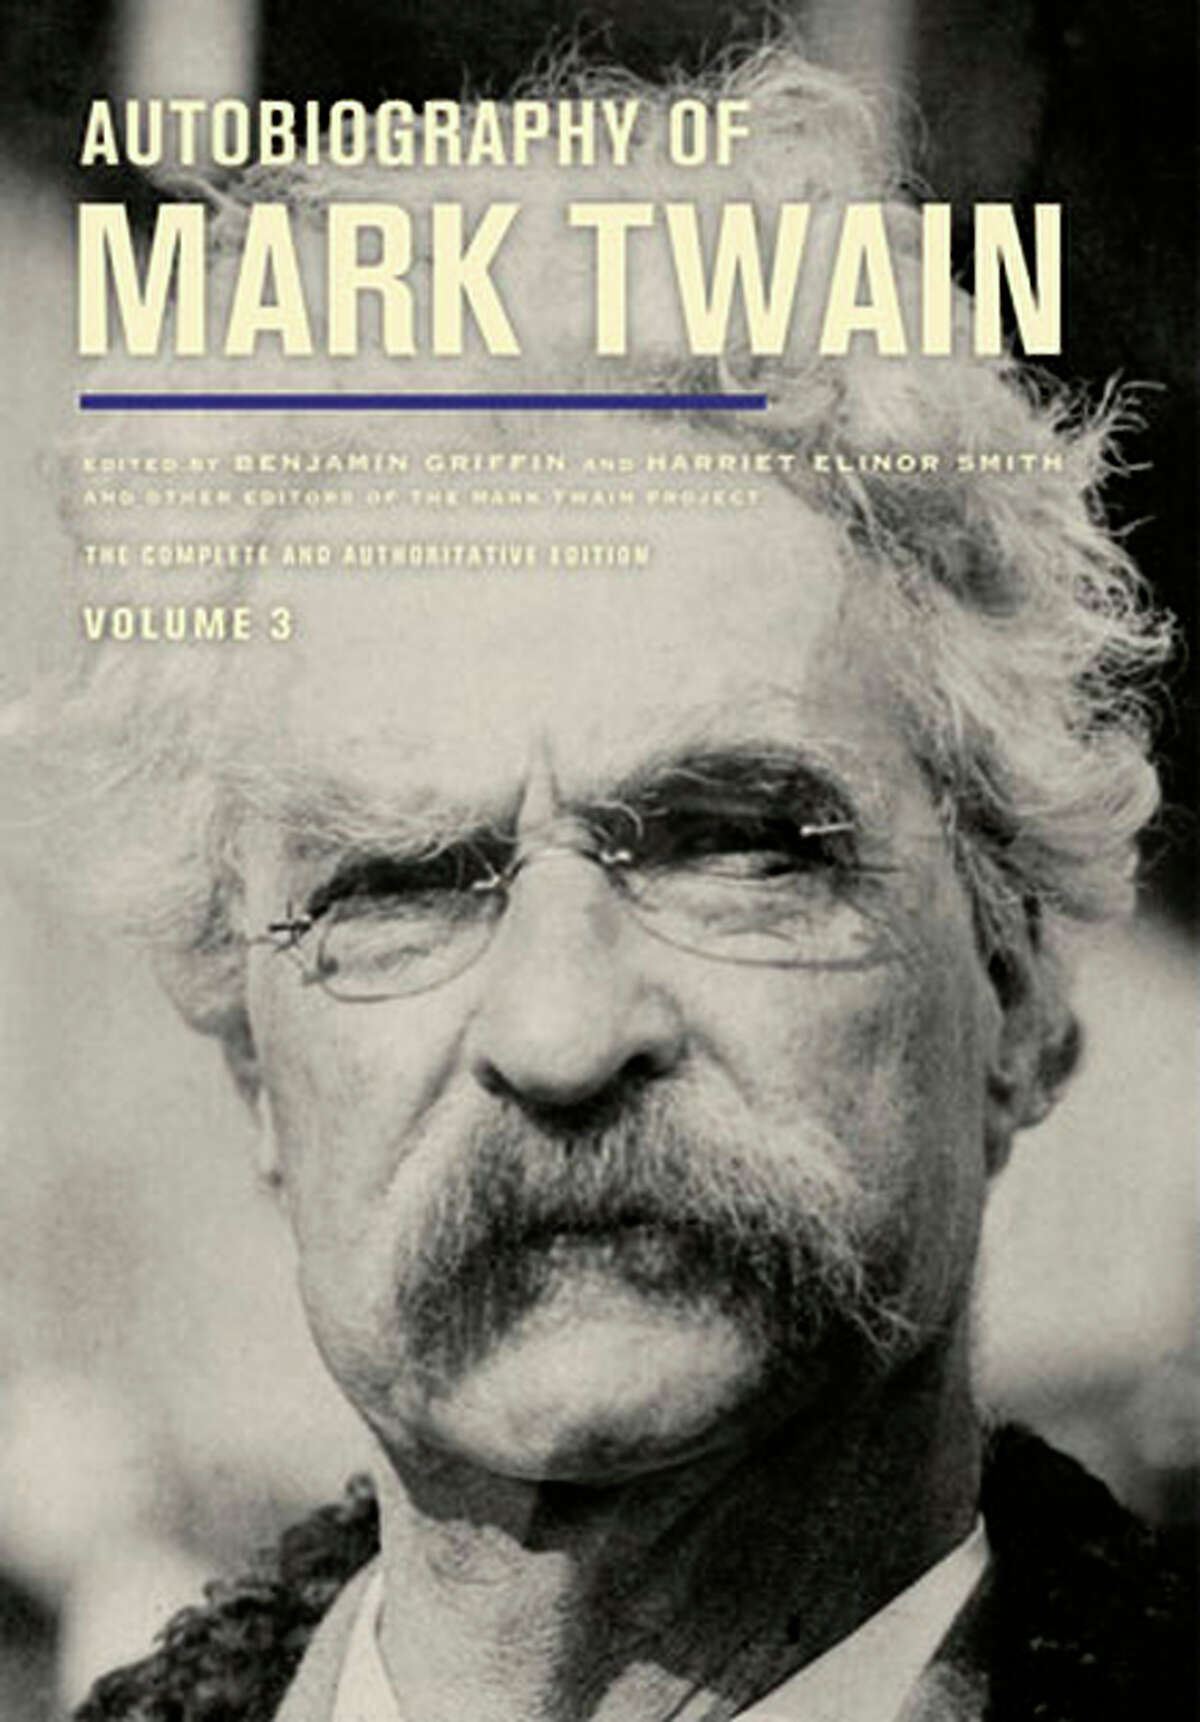 'Autobiography of Mark Twain Volume 3'